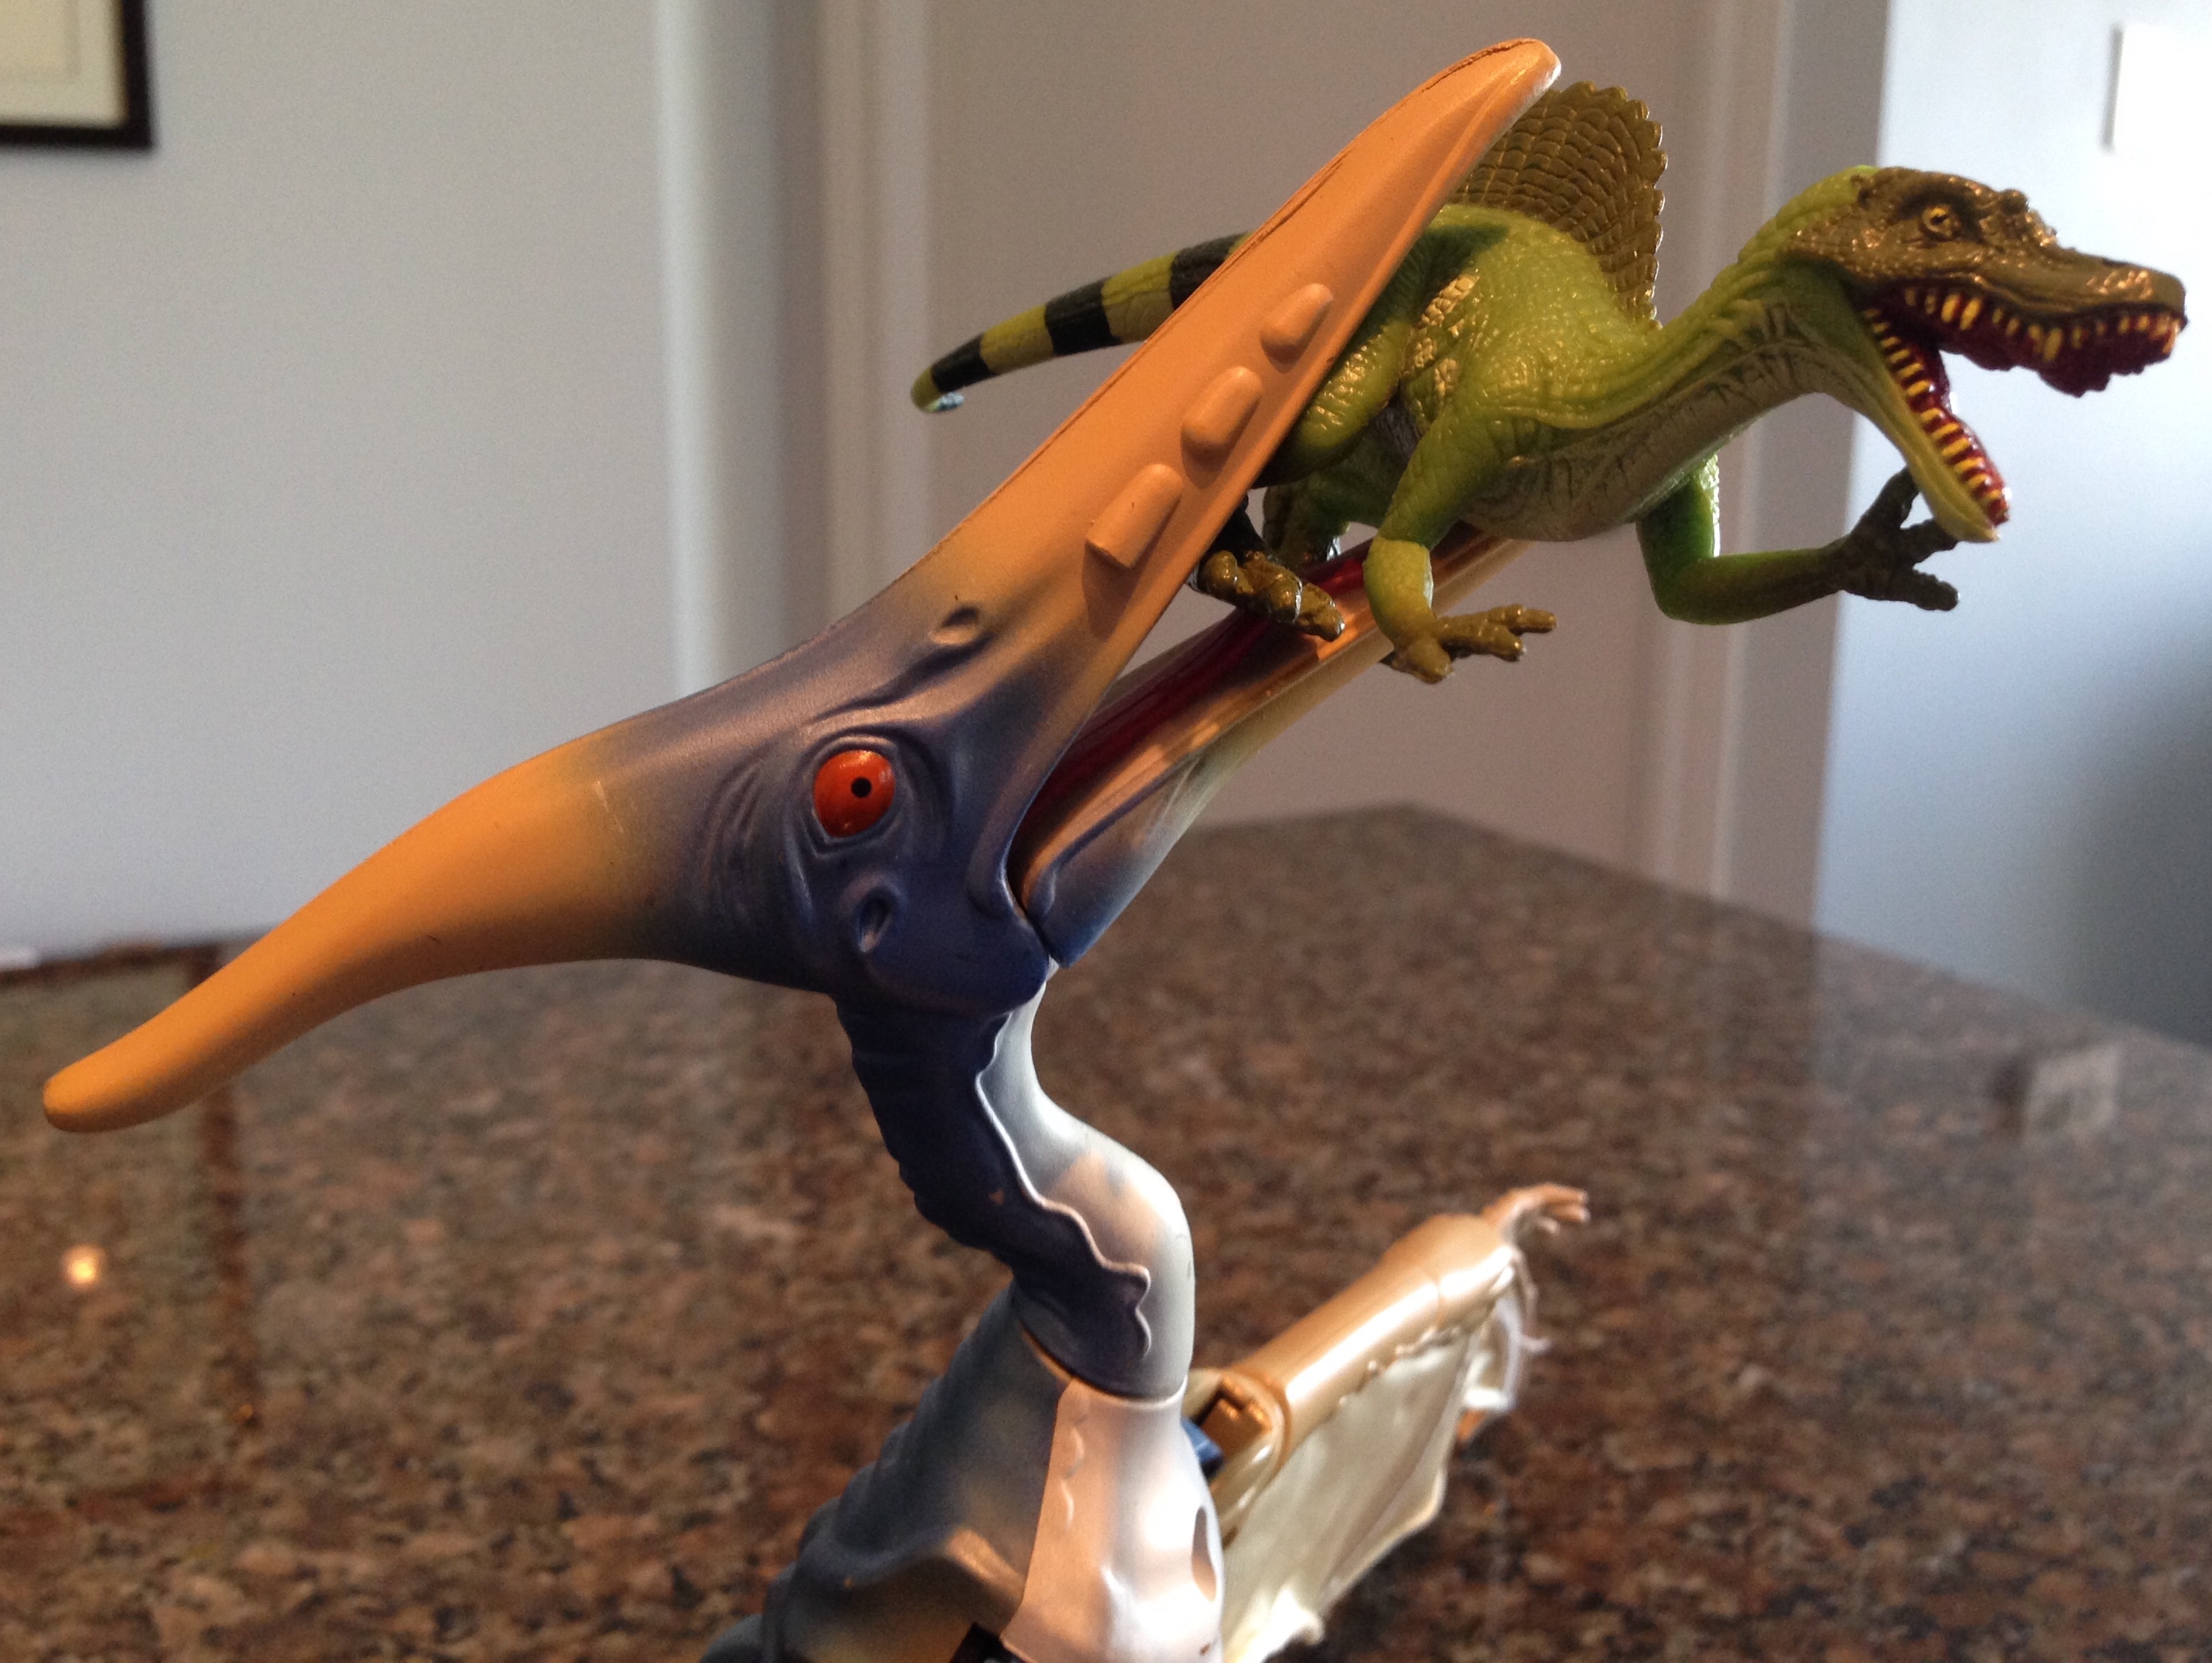 Pteranodon (The Lost World, Jurassic Park 3, Jurassic World)